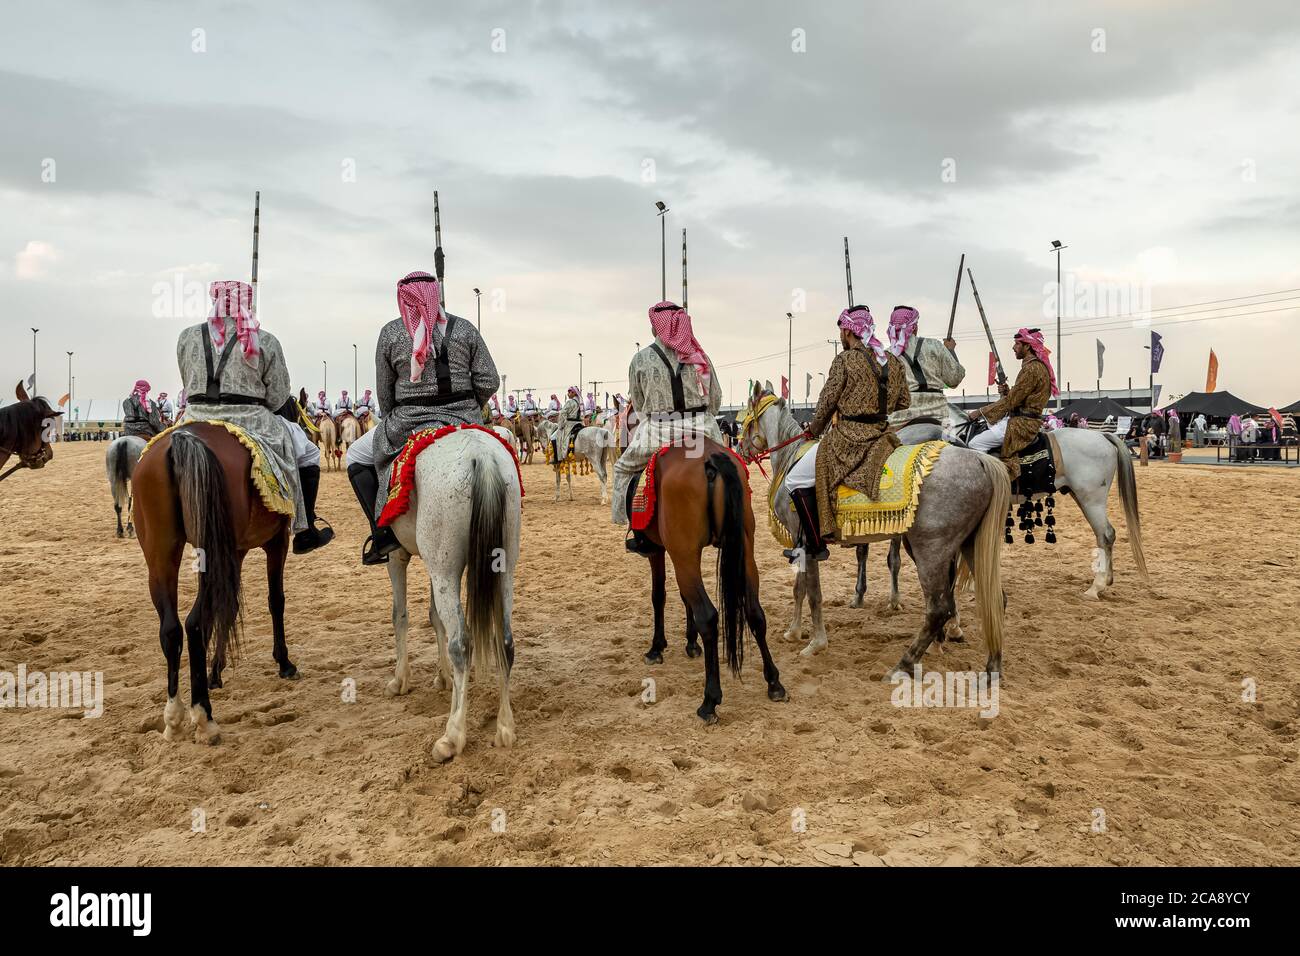 Saudi Arab Horse riders with their horse on traditional desert safari festival in abqaiq Saudi Arabia. 10-Jan-2020 Stock Photo